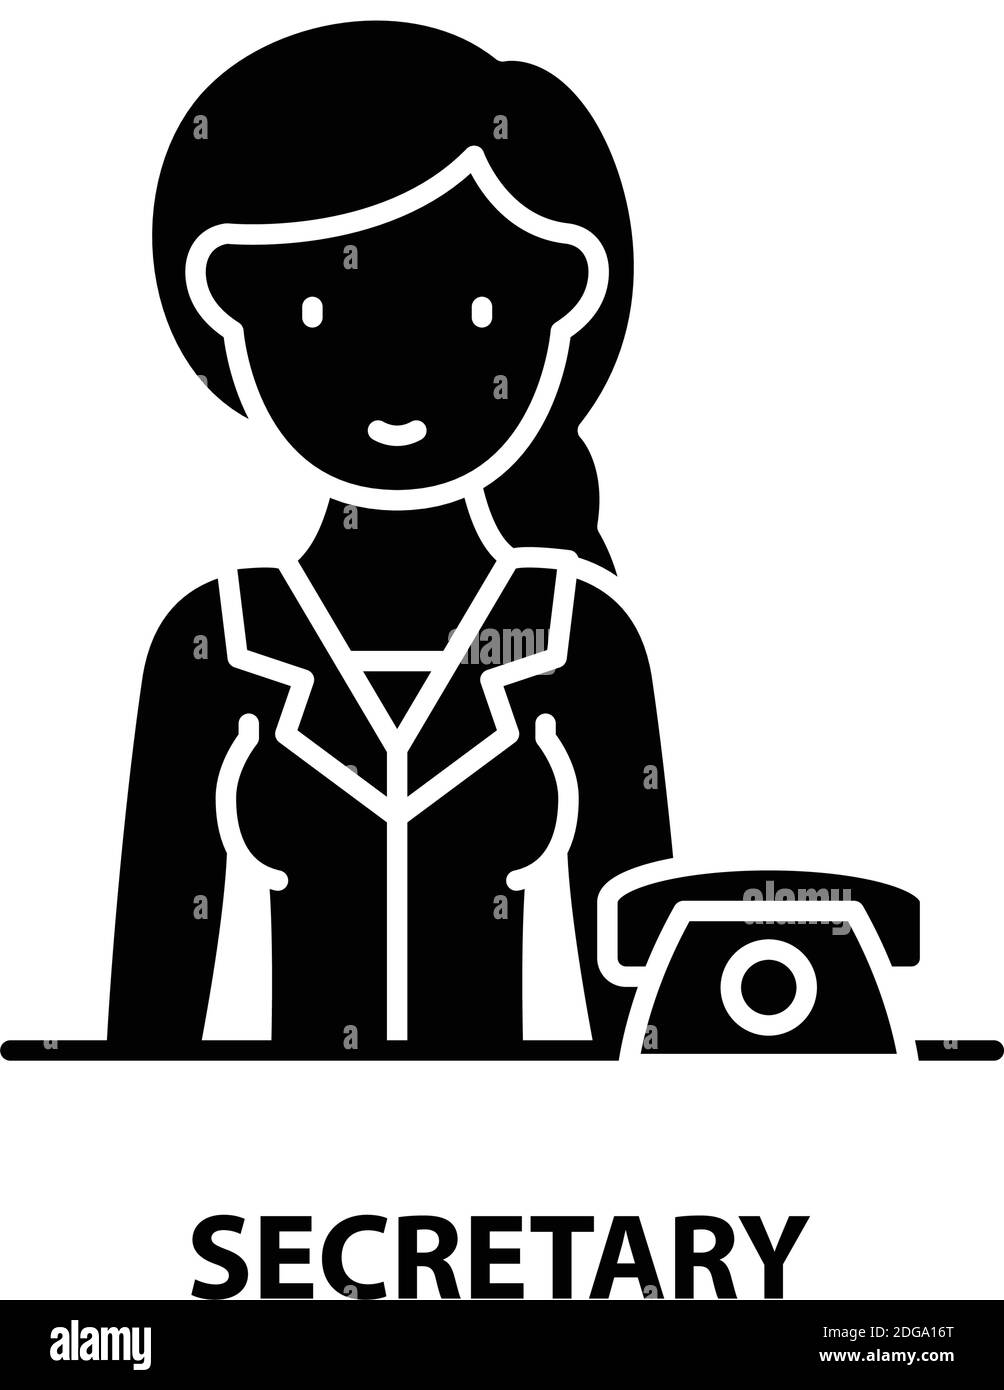 secretary sign icon, black vector sign with editable strokes, concept illustration Stock Vector